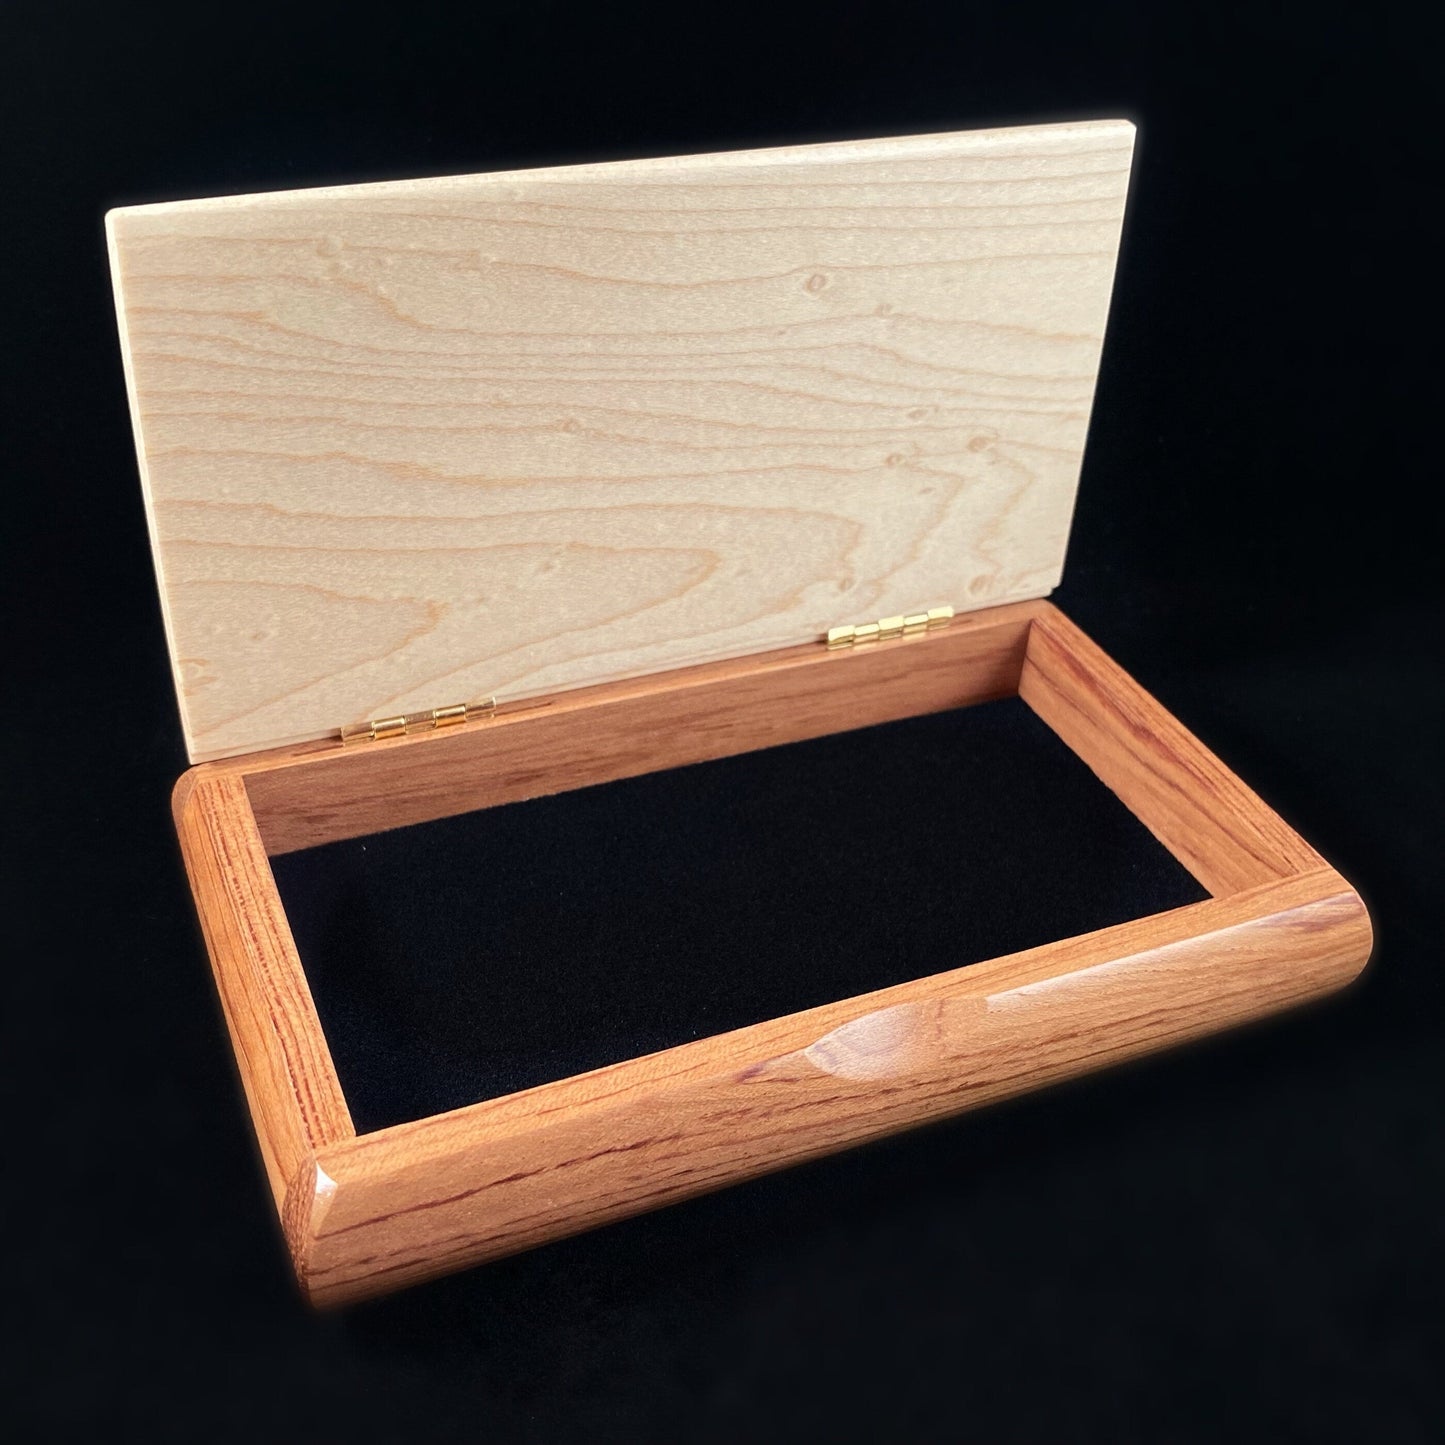 Great Lakes Handmade Wooden Box - Birdseye Maple and Bubinga